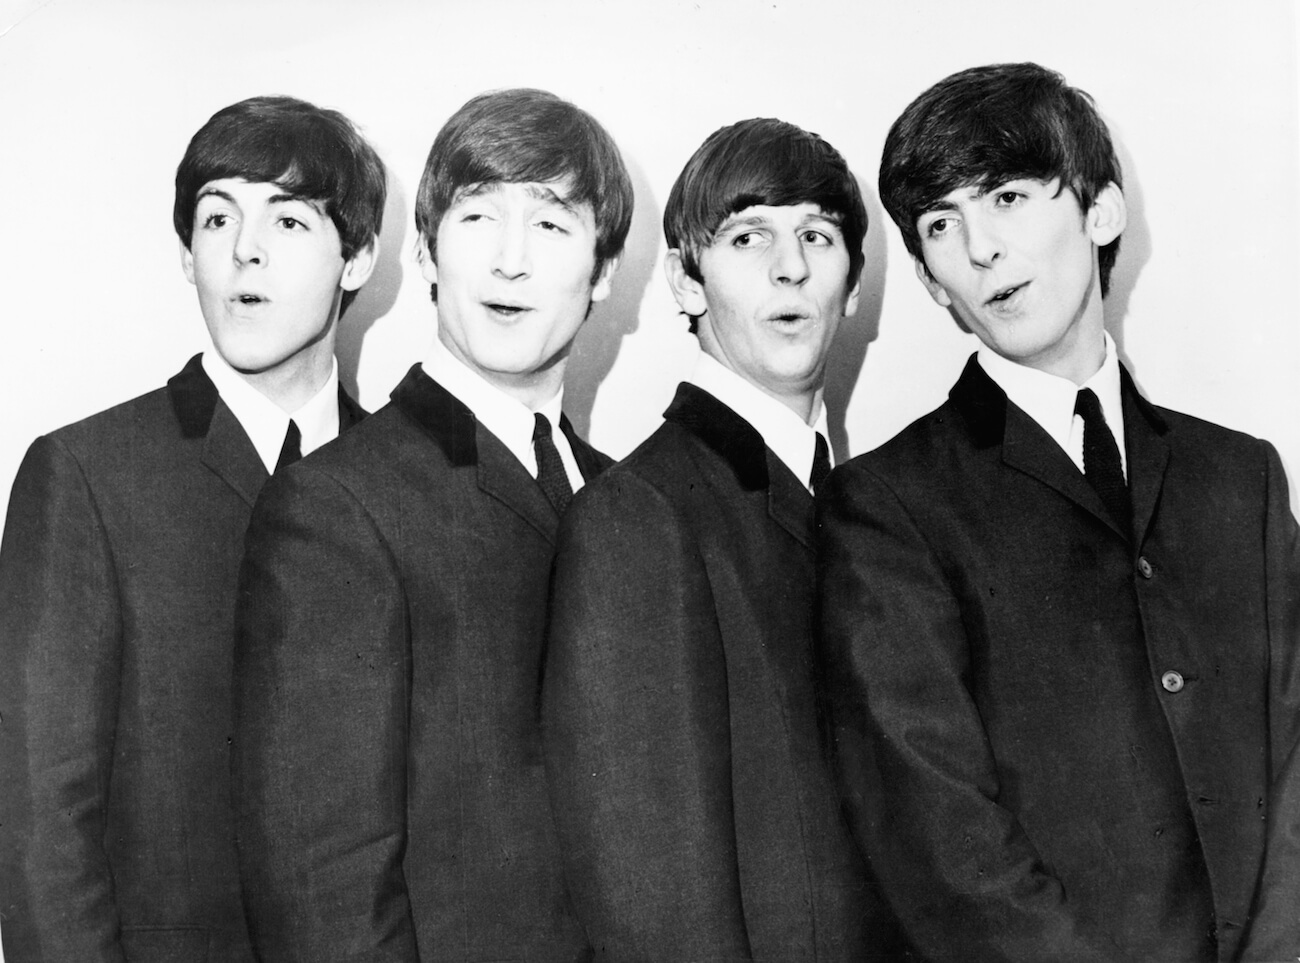 The Beatles posing in black suits in 1964.